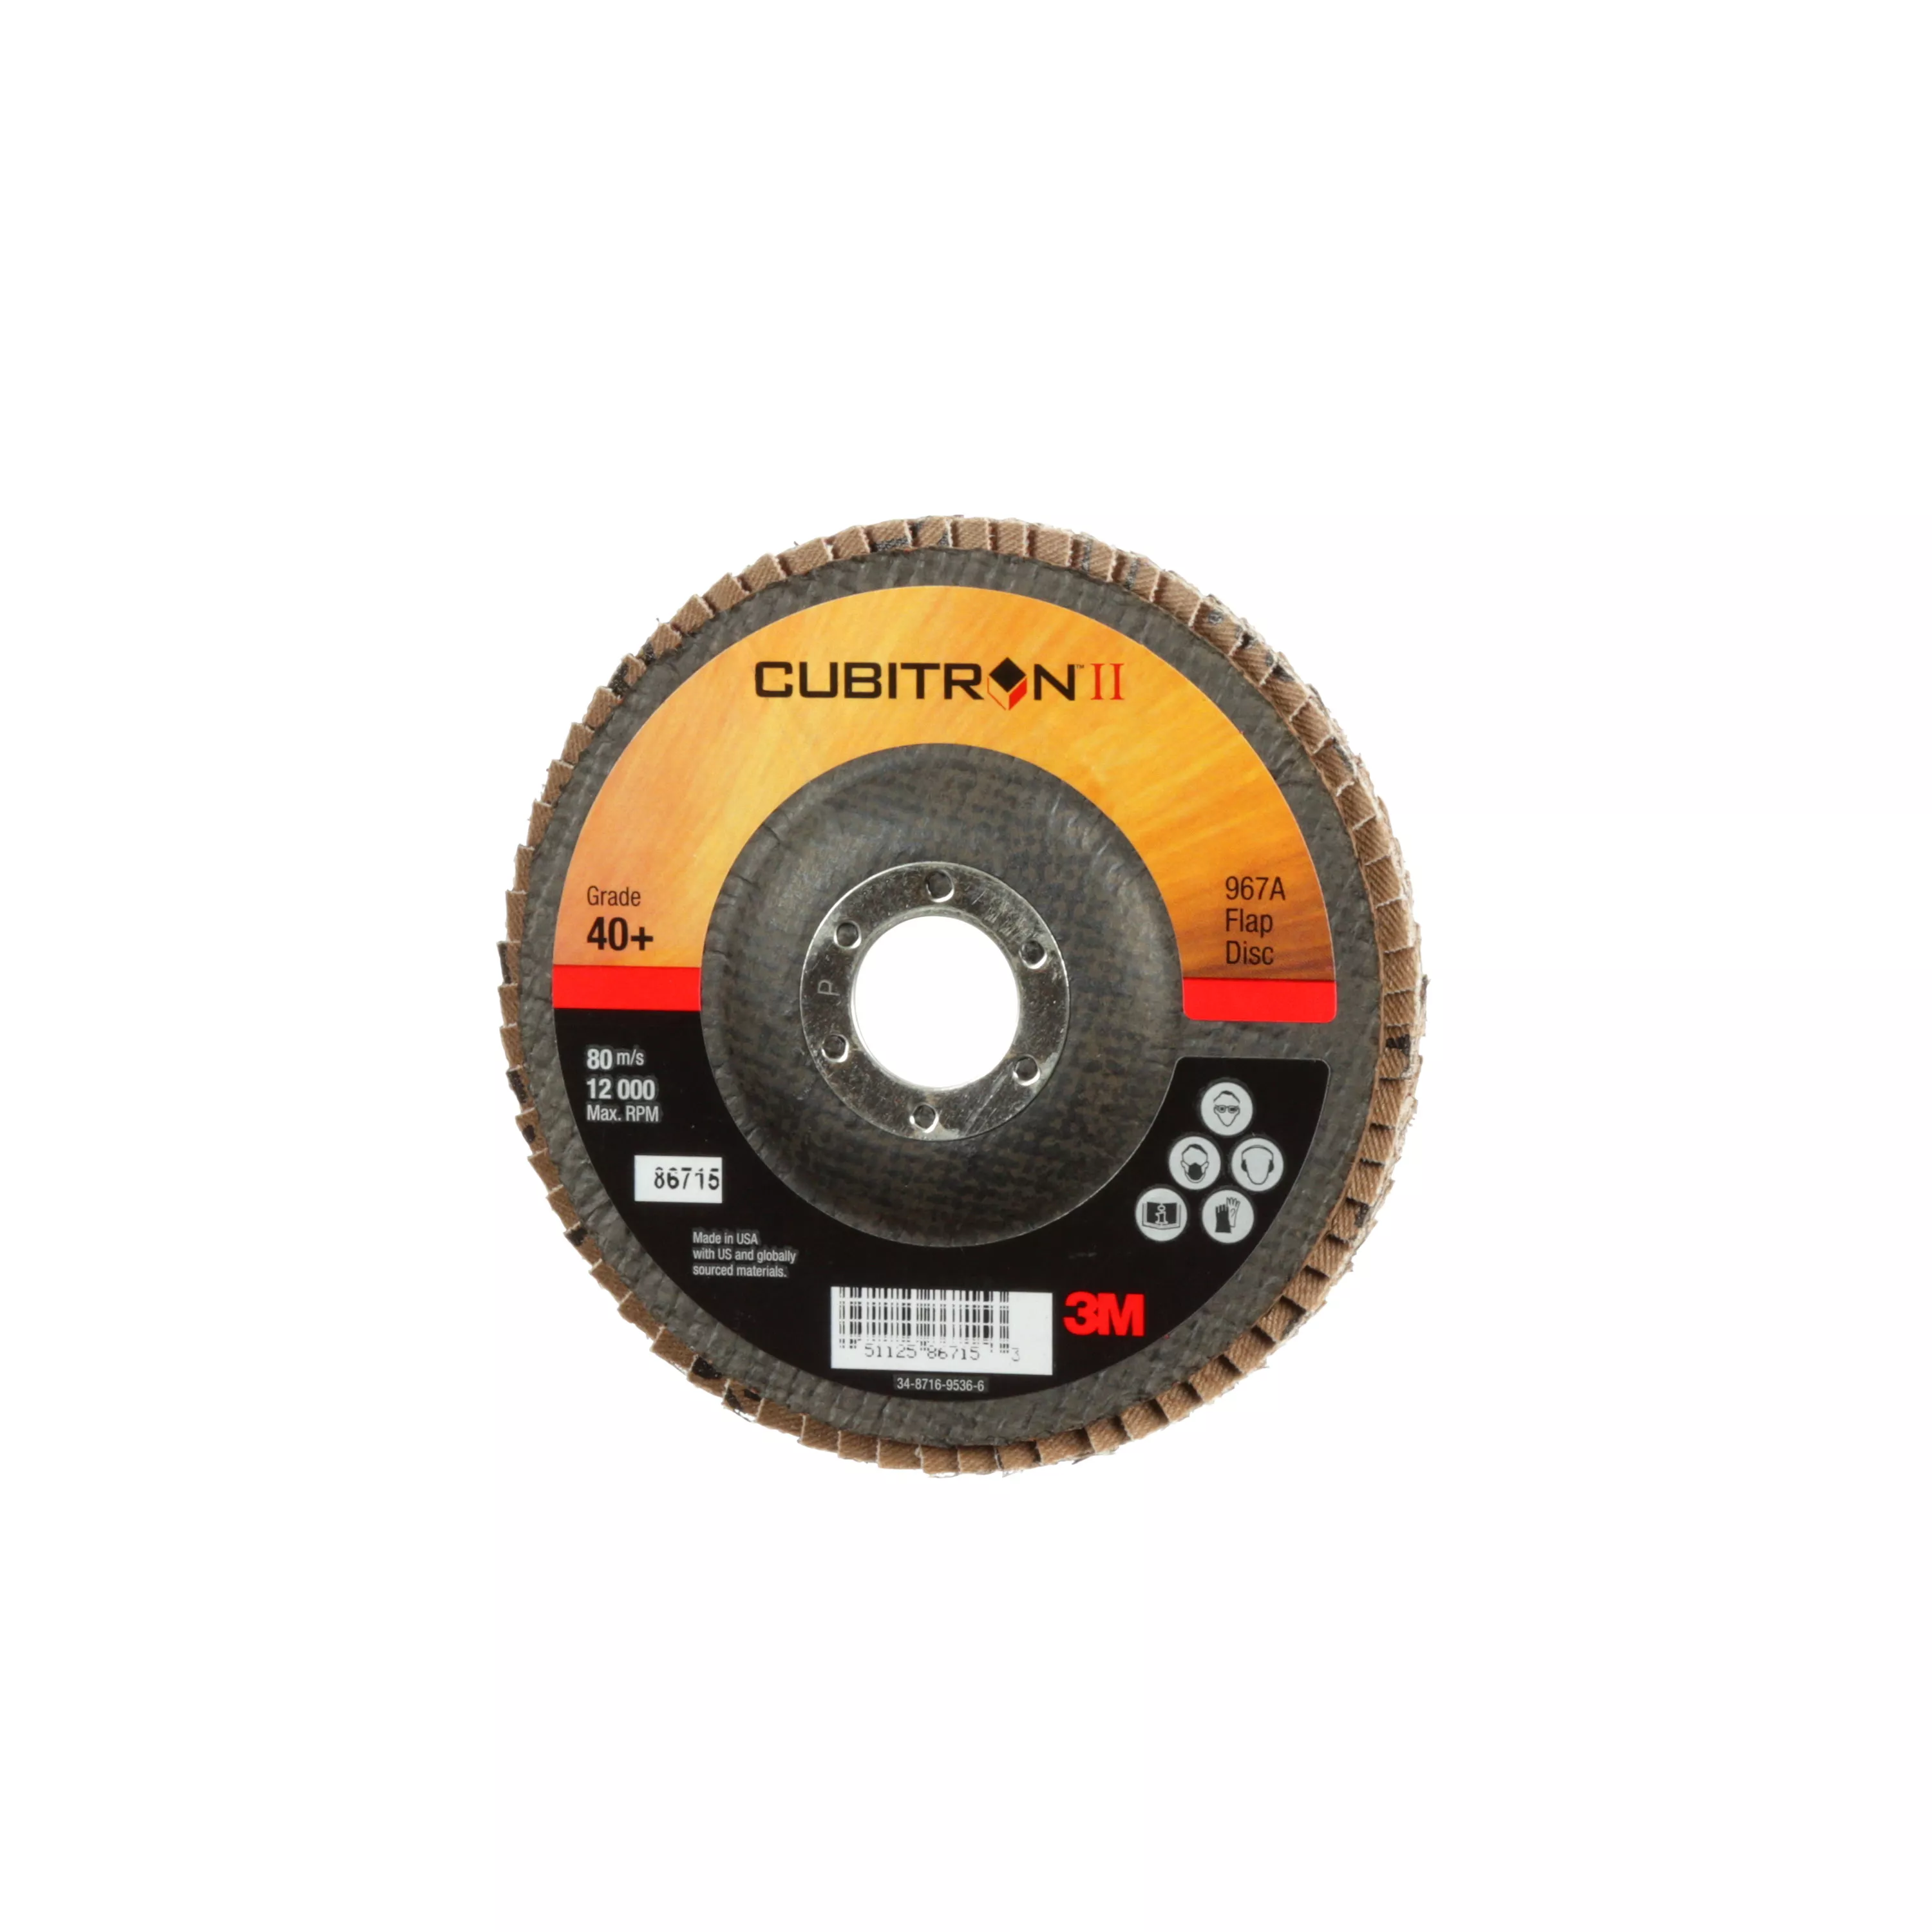 SKU 7000148196 | 3M™ Cubitron™ II Flap Disc 967A